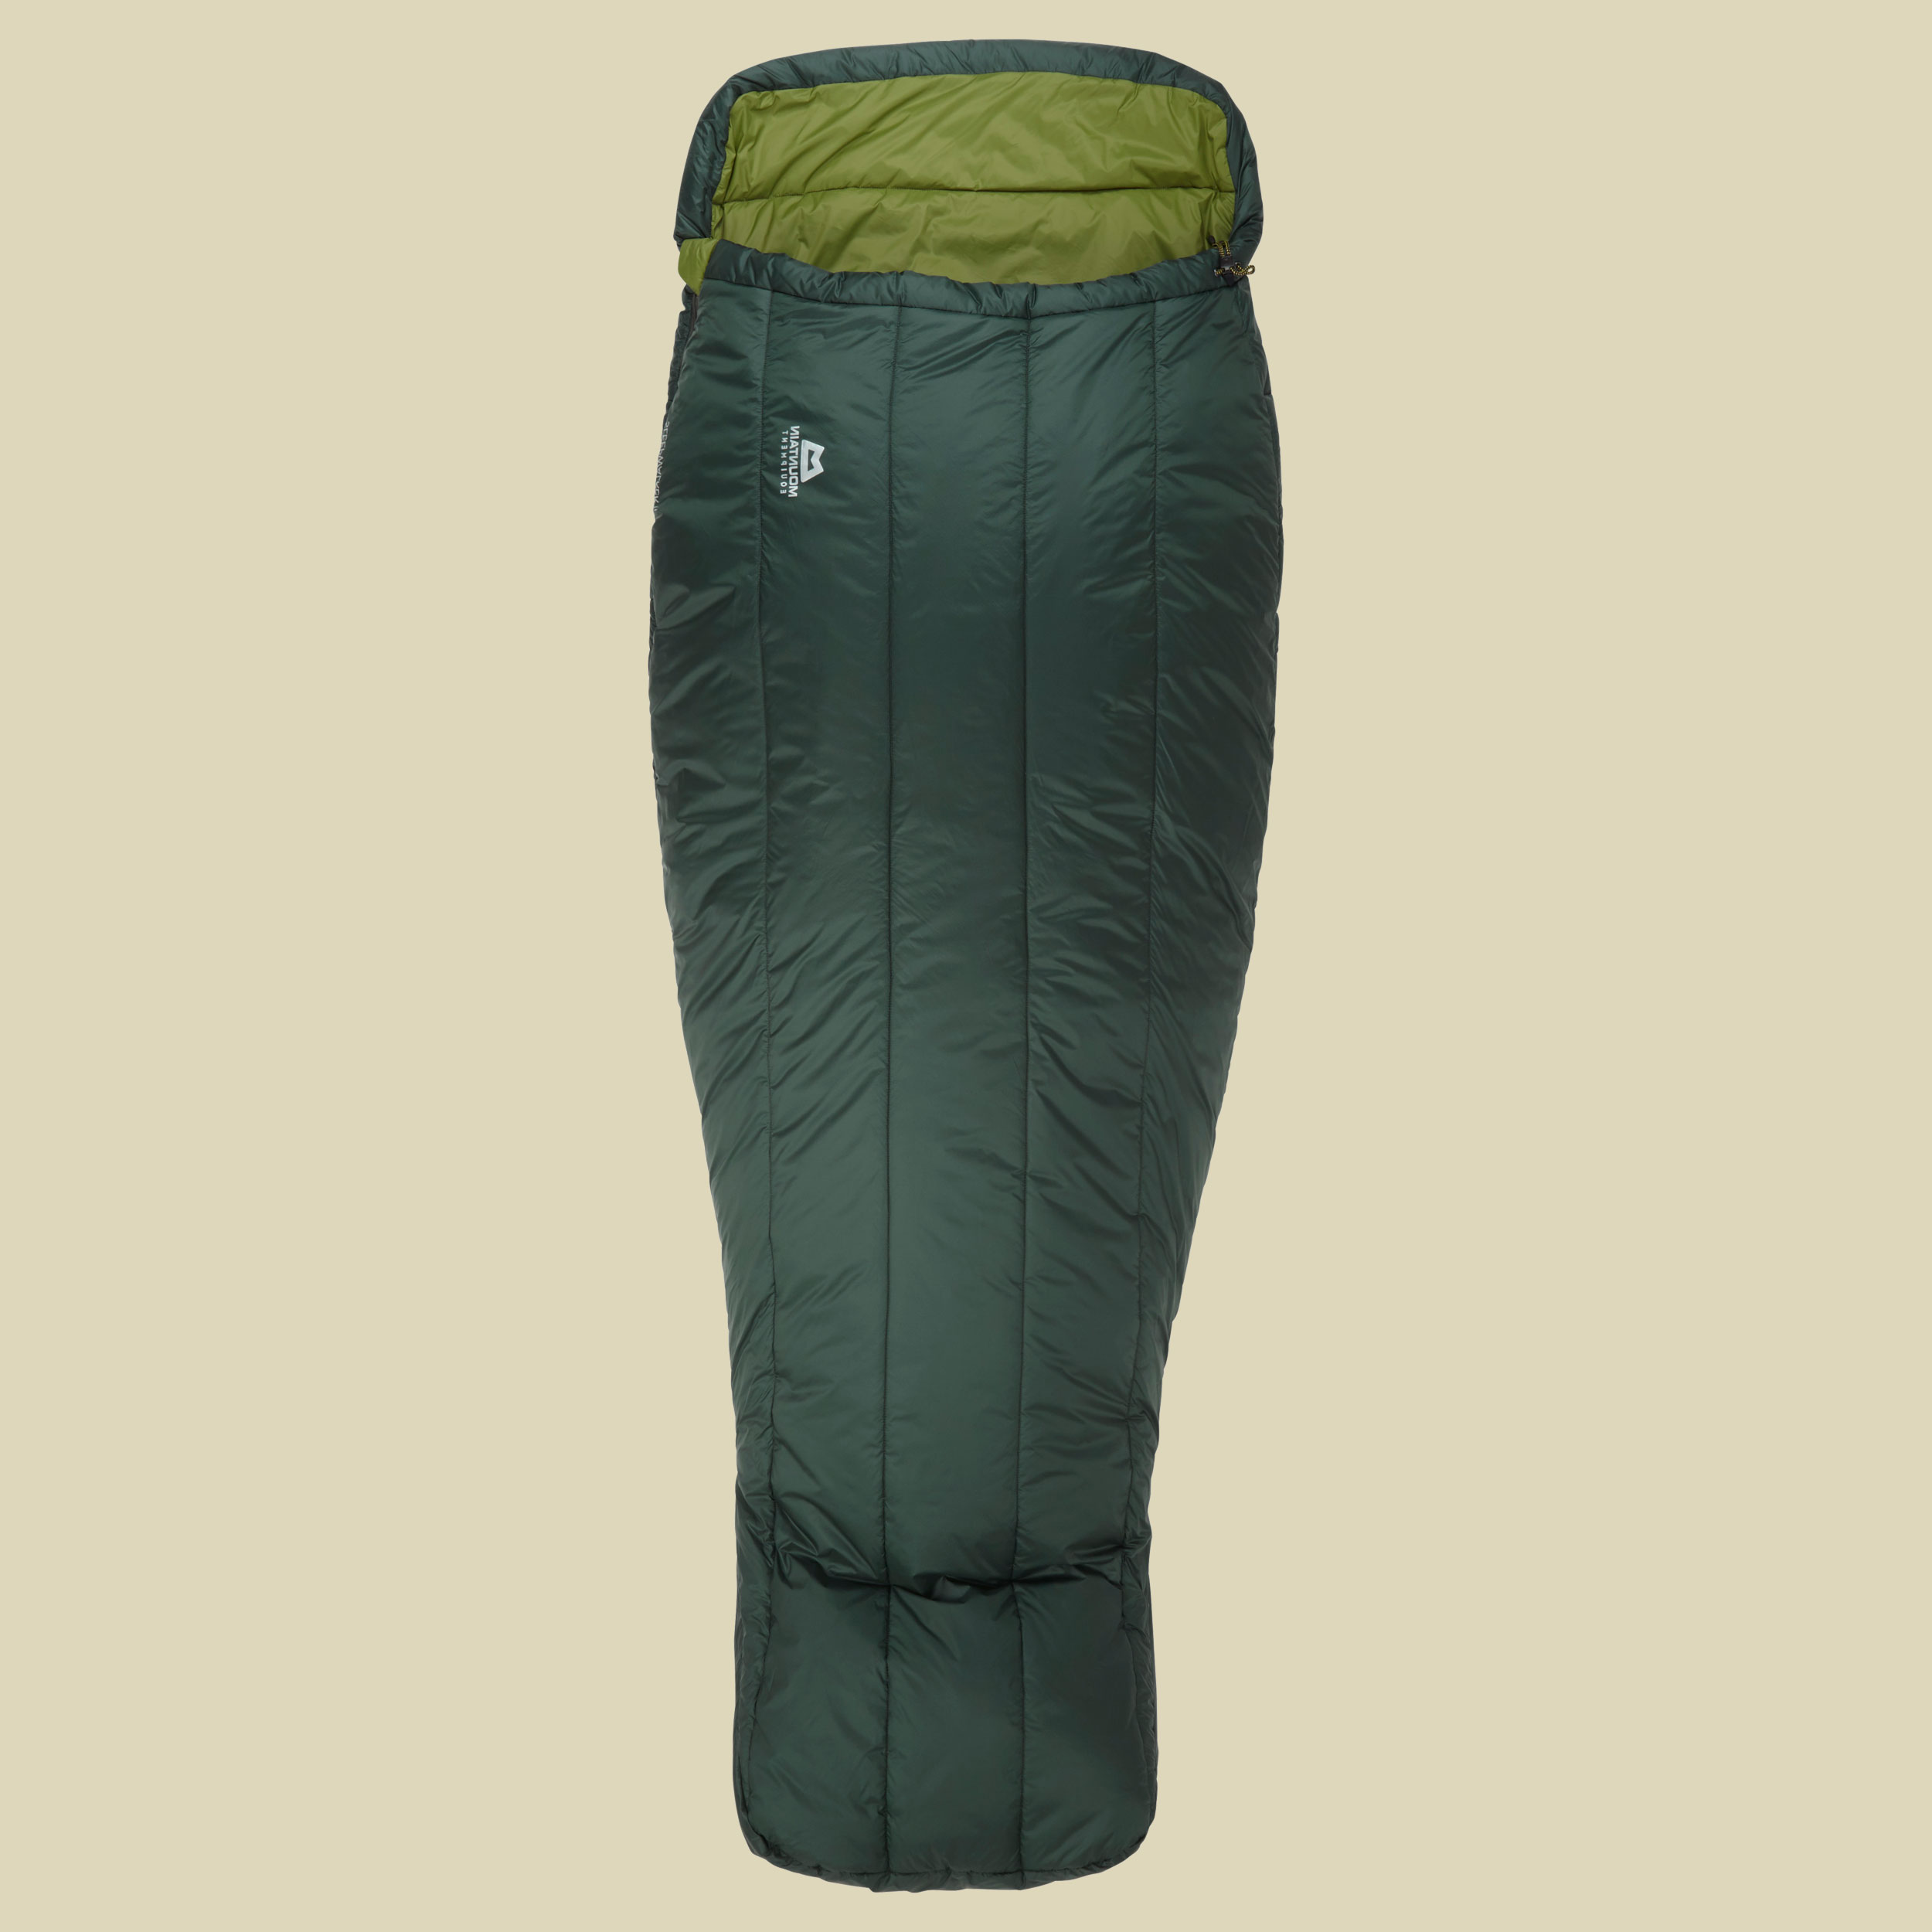 Sleepwalker II bis Körpergröße Schlafsack 185 cm Farbe pinrgrove/cedar, links